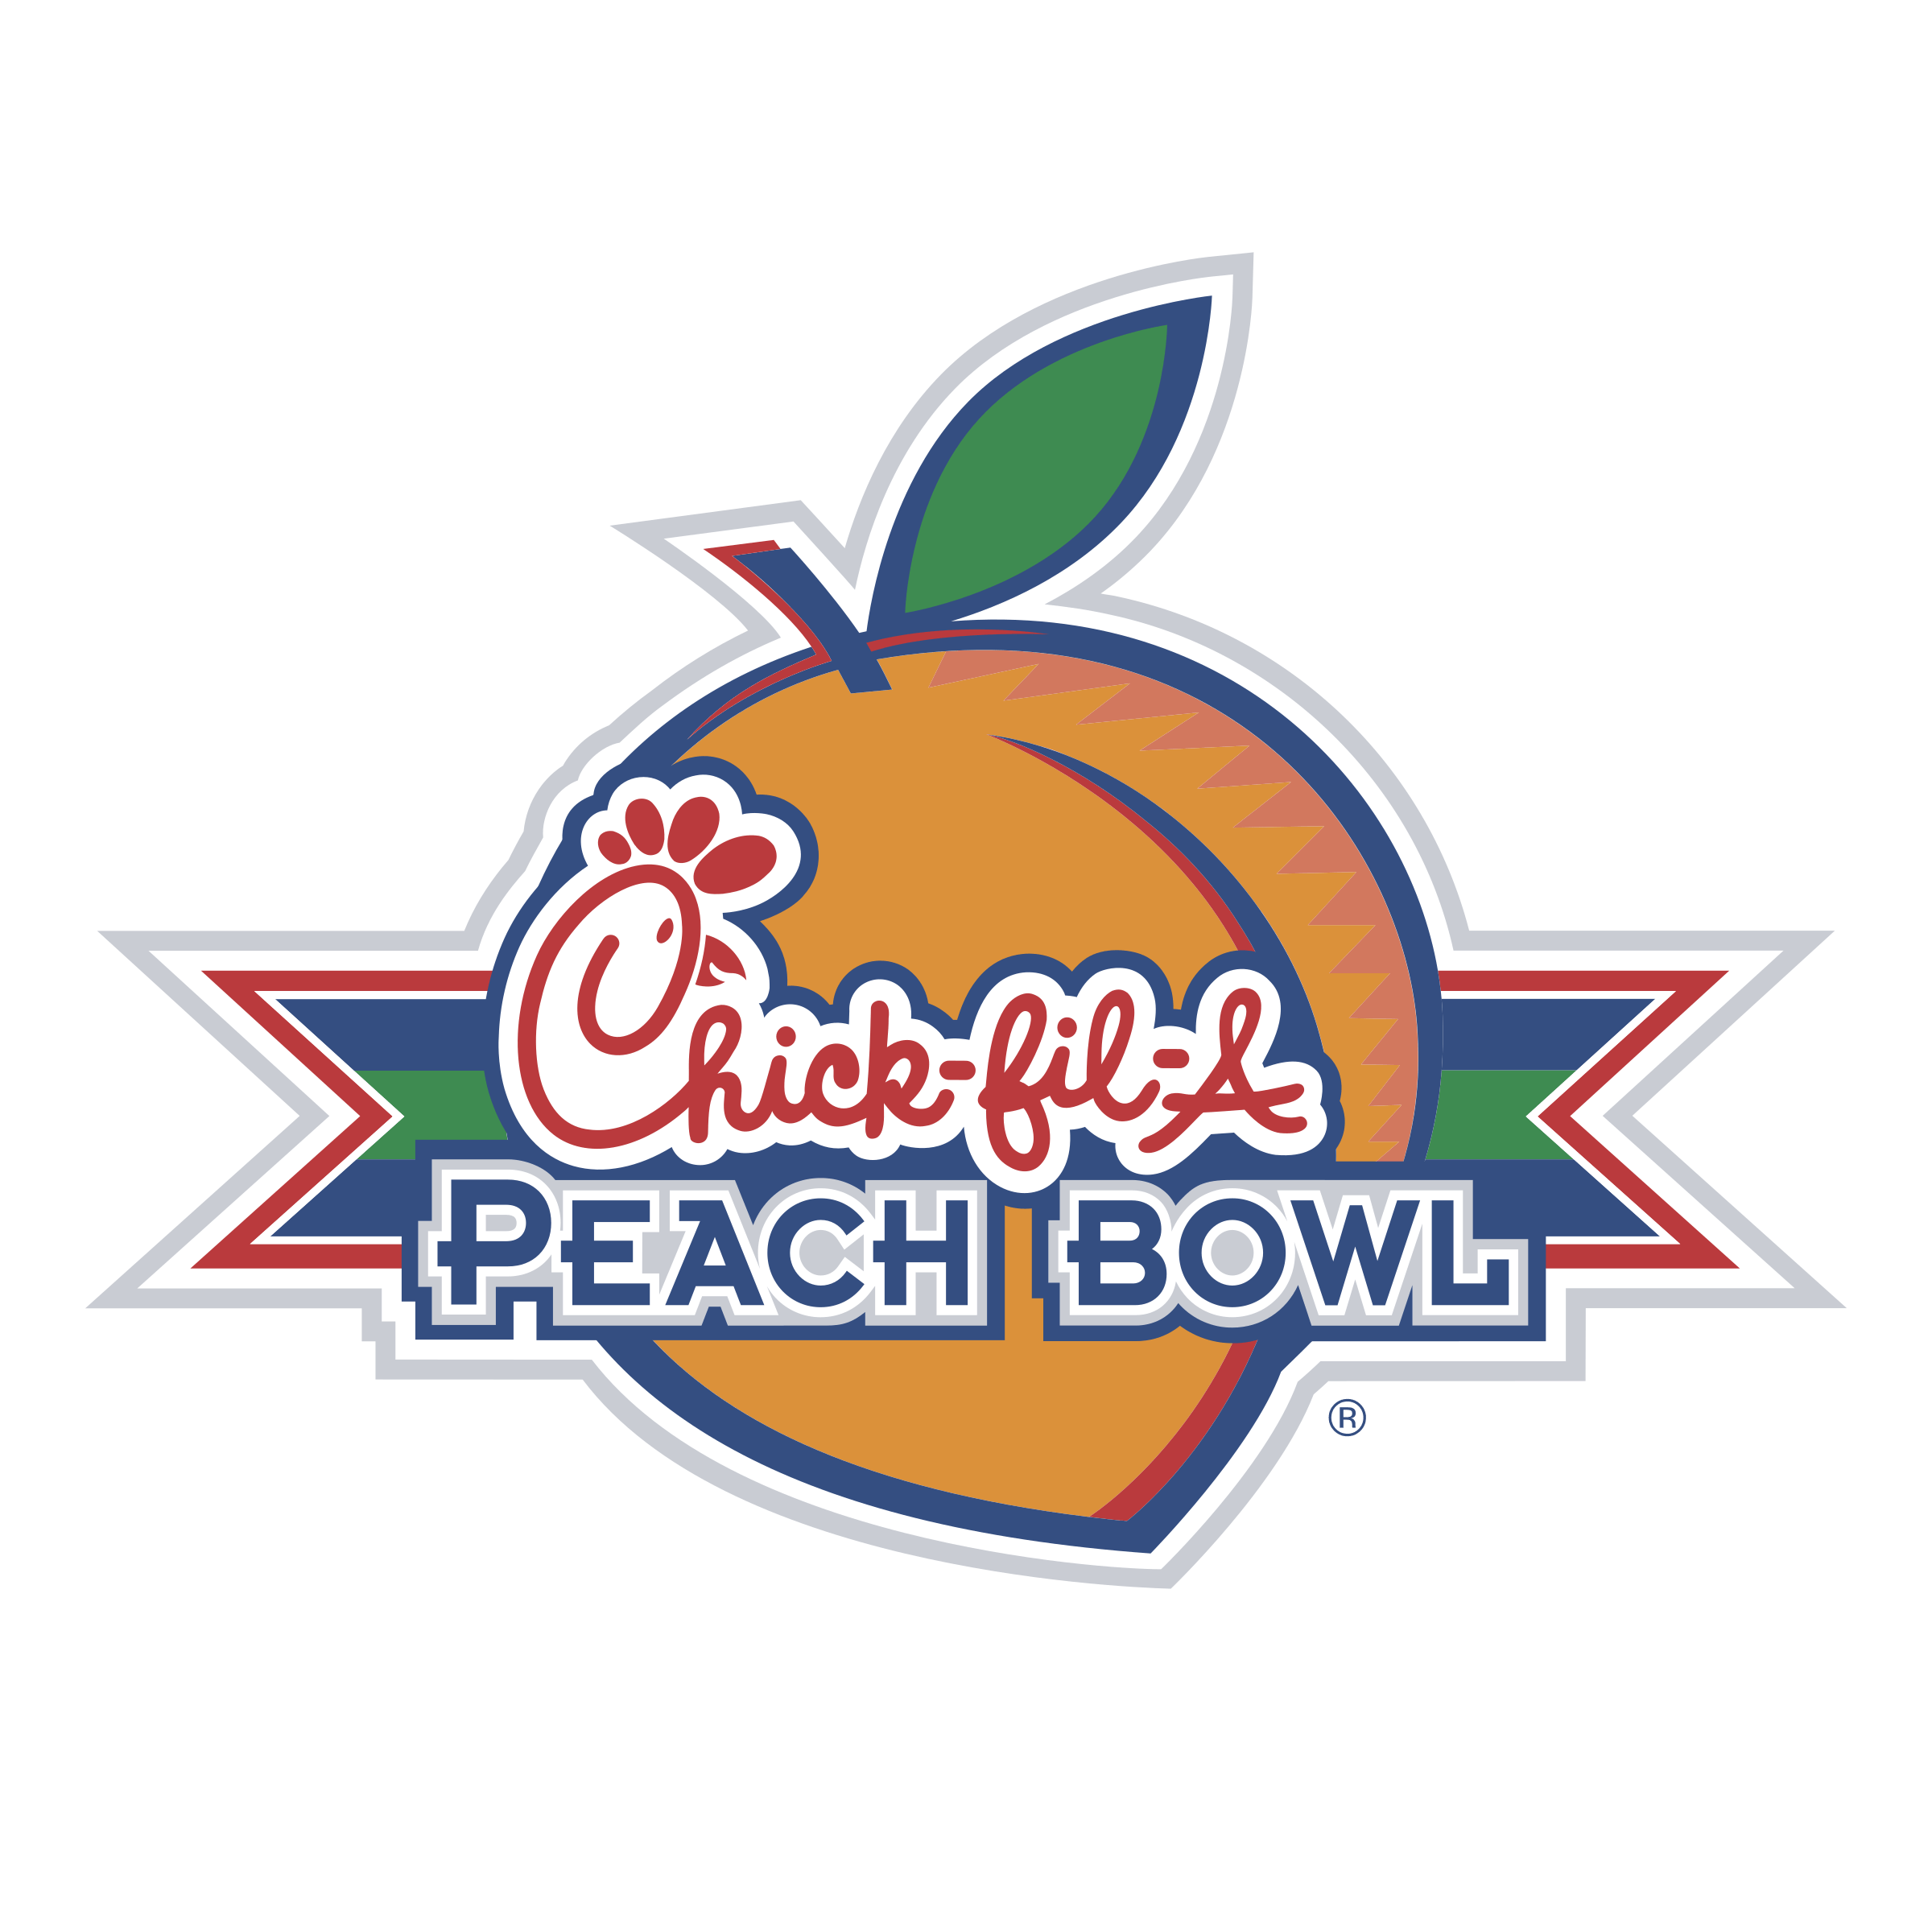 Peach Bowl Logo - Chick fil A Peach Bowl Logo PNG Transparent & SVG Vector